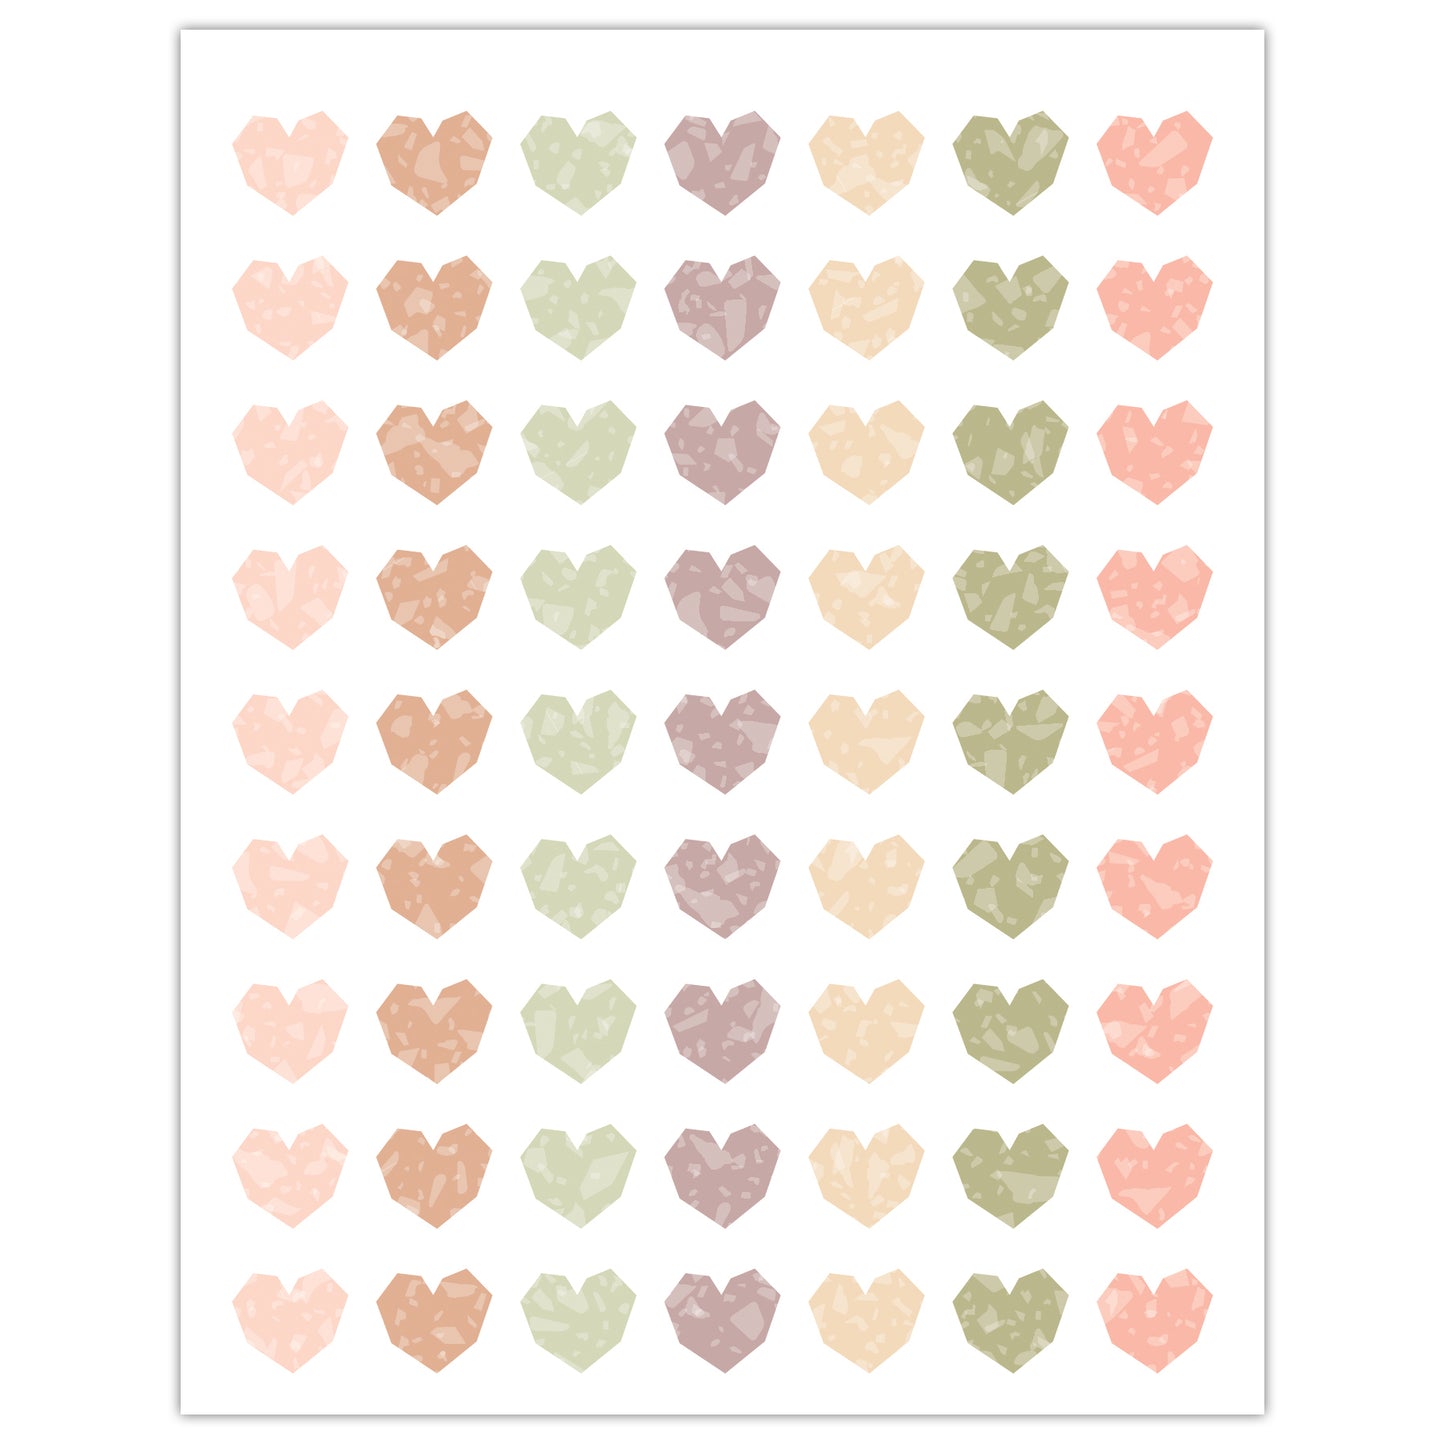 Terrazzo Tones Hearts Mini Stickers, 378 Per Pack, 12 Packs